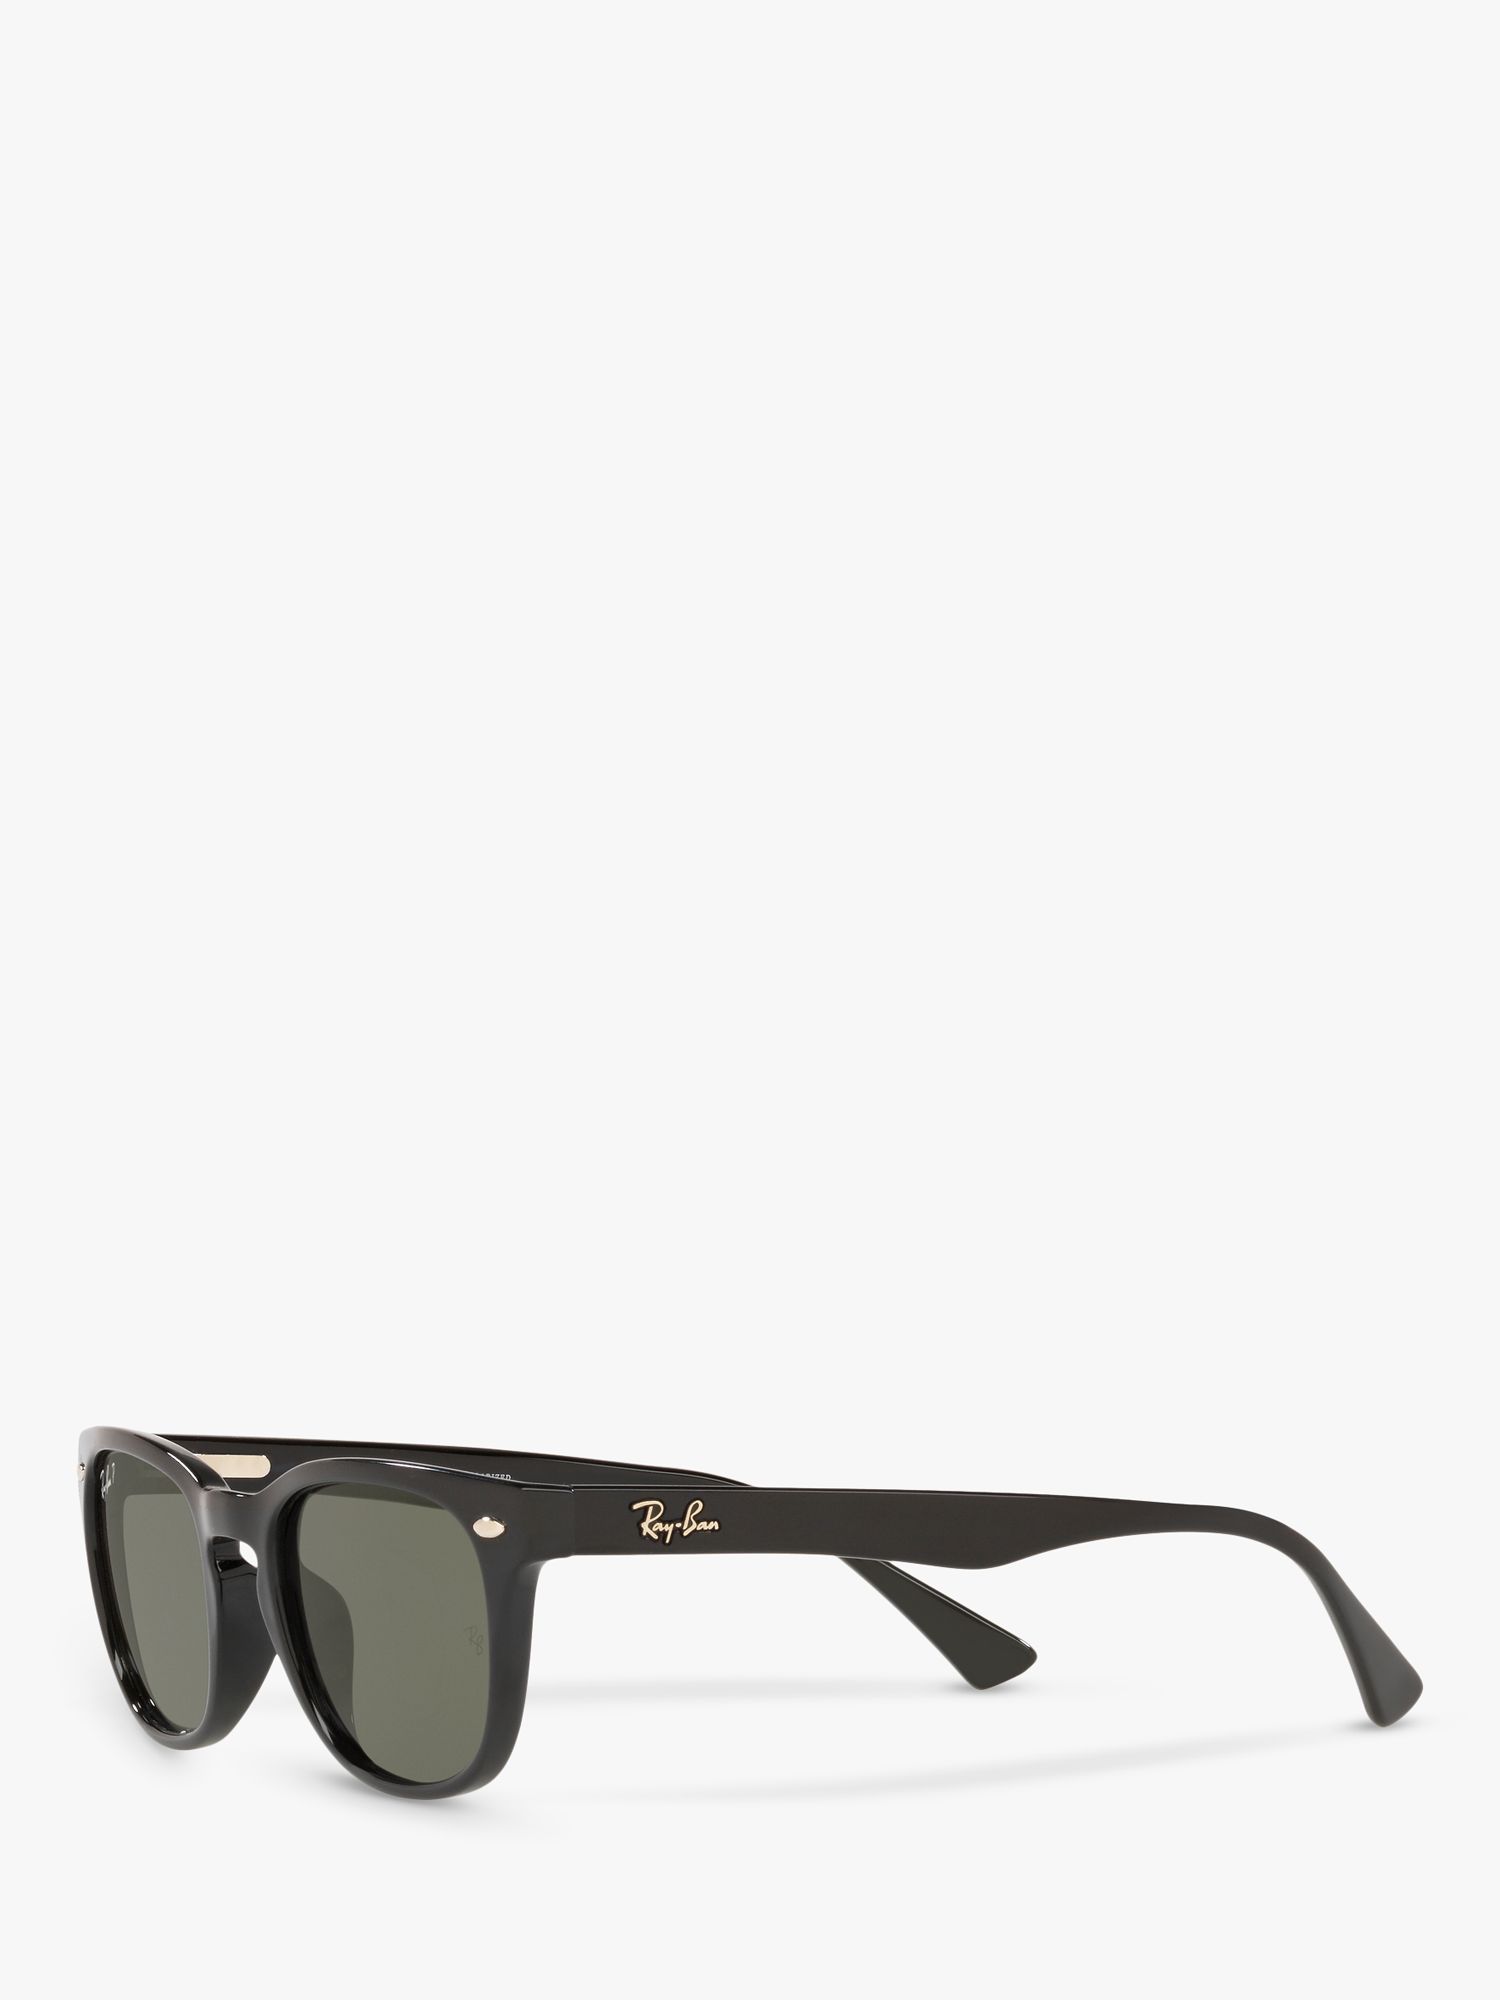 Ray-Ban RB4140 Women's Polarised Square Sunglasses, Black/Green